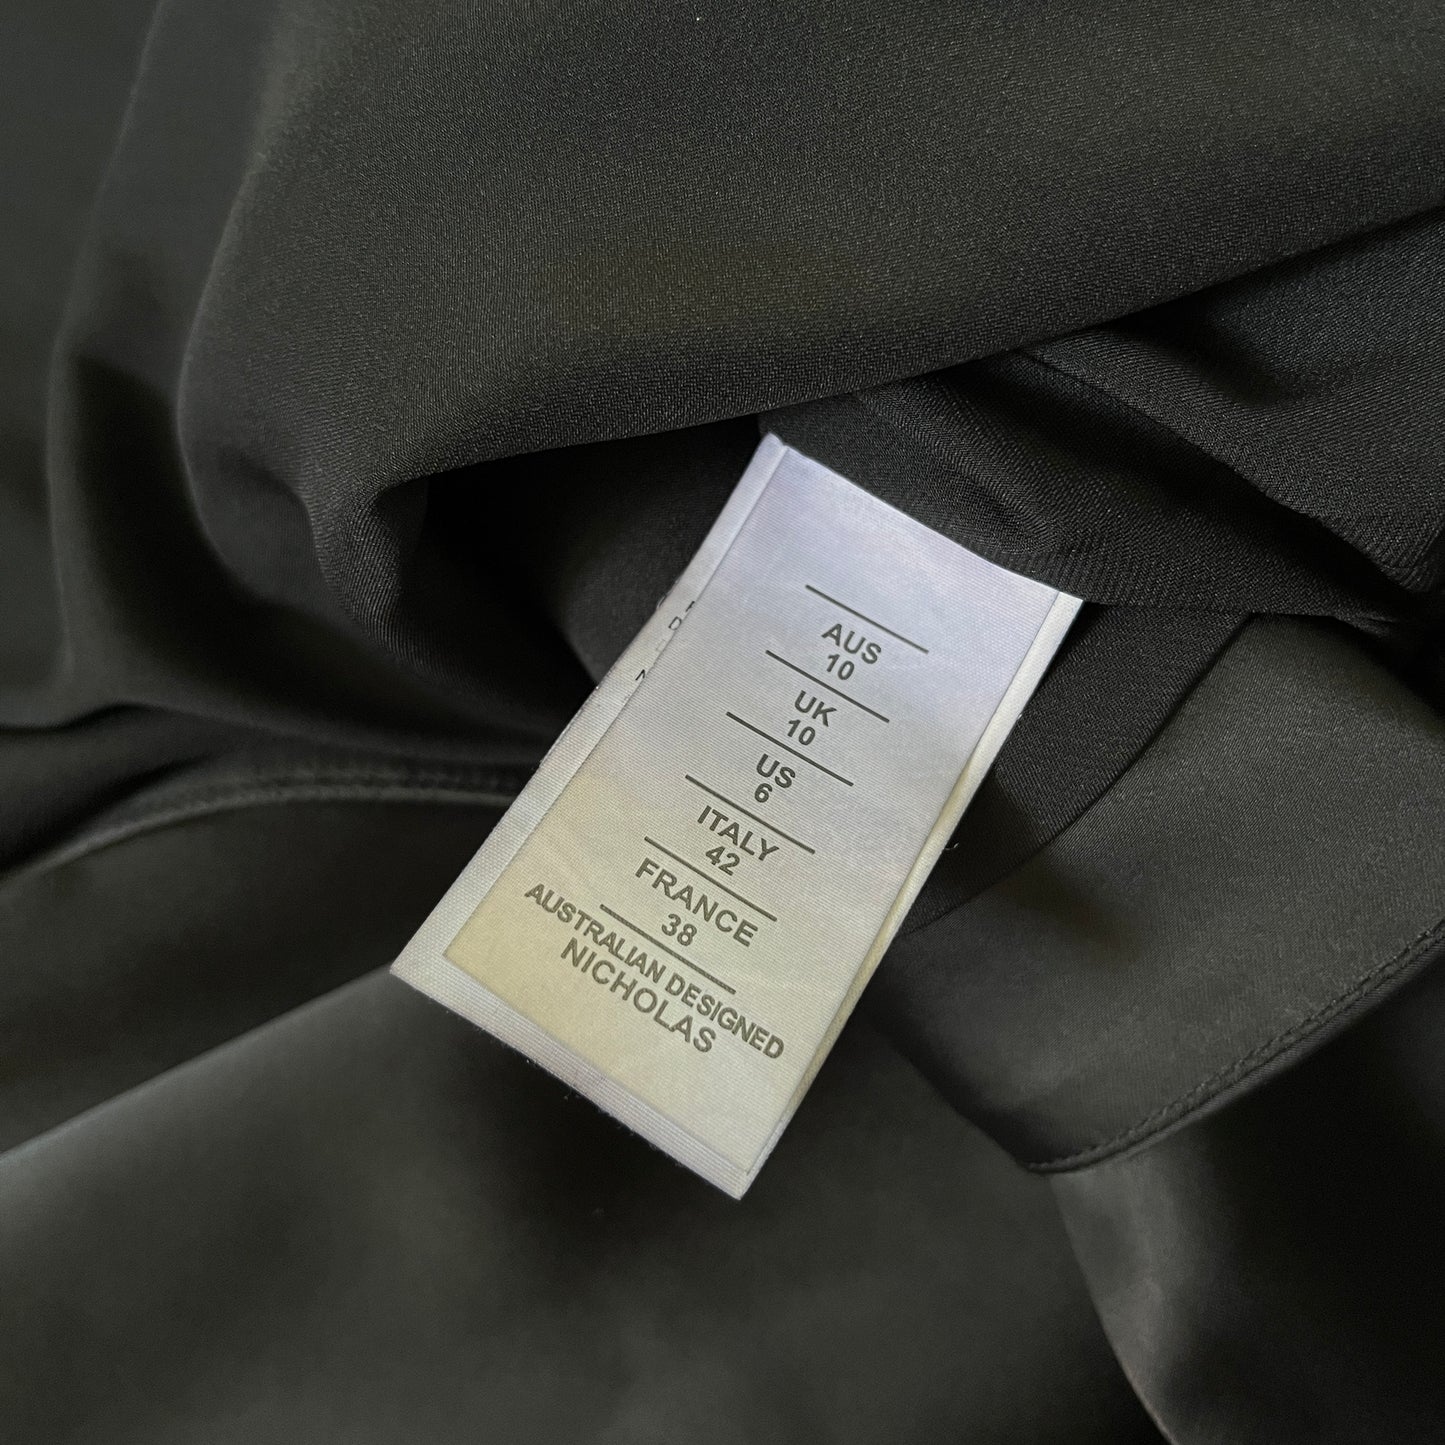 NICHOLAS Erelyn Strapless Gown in Black